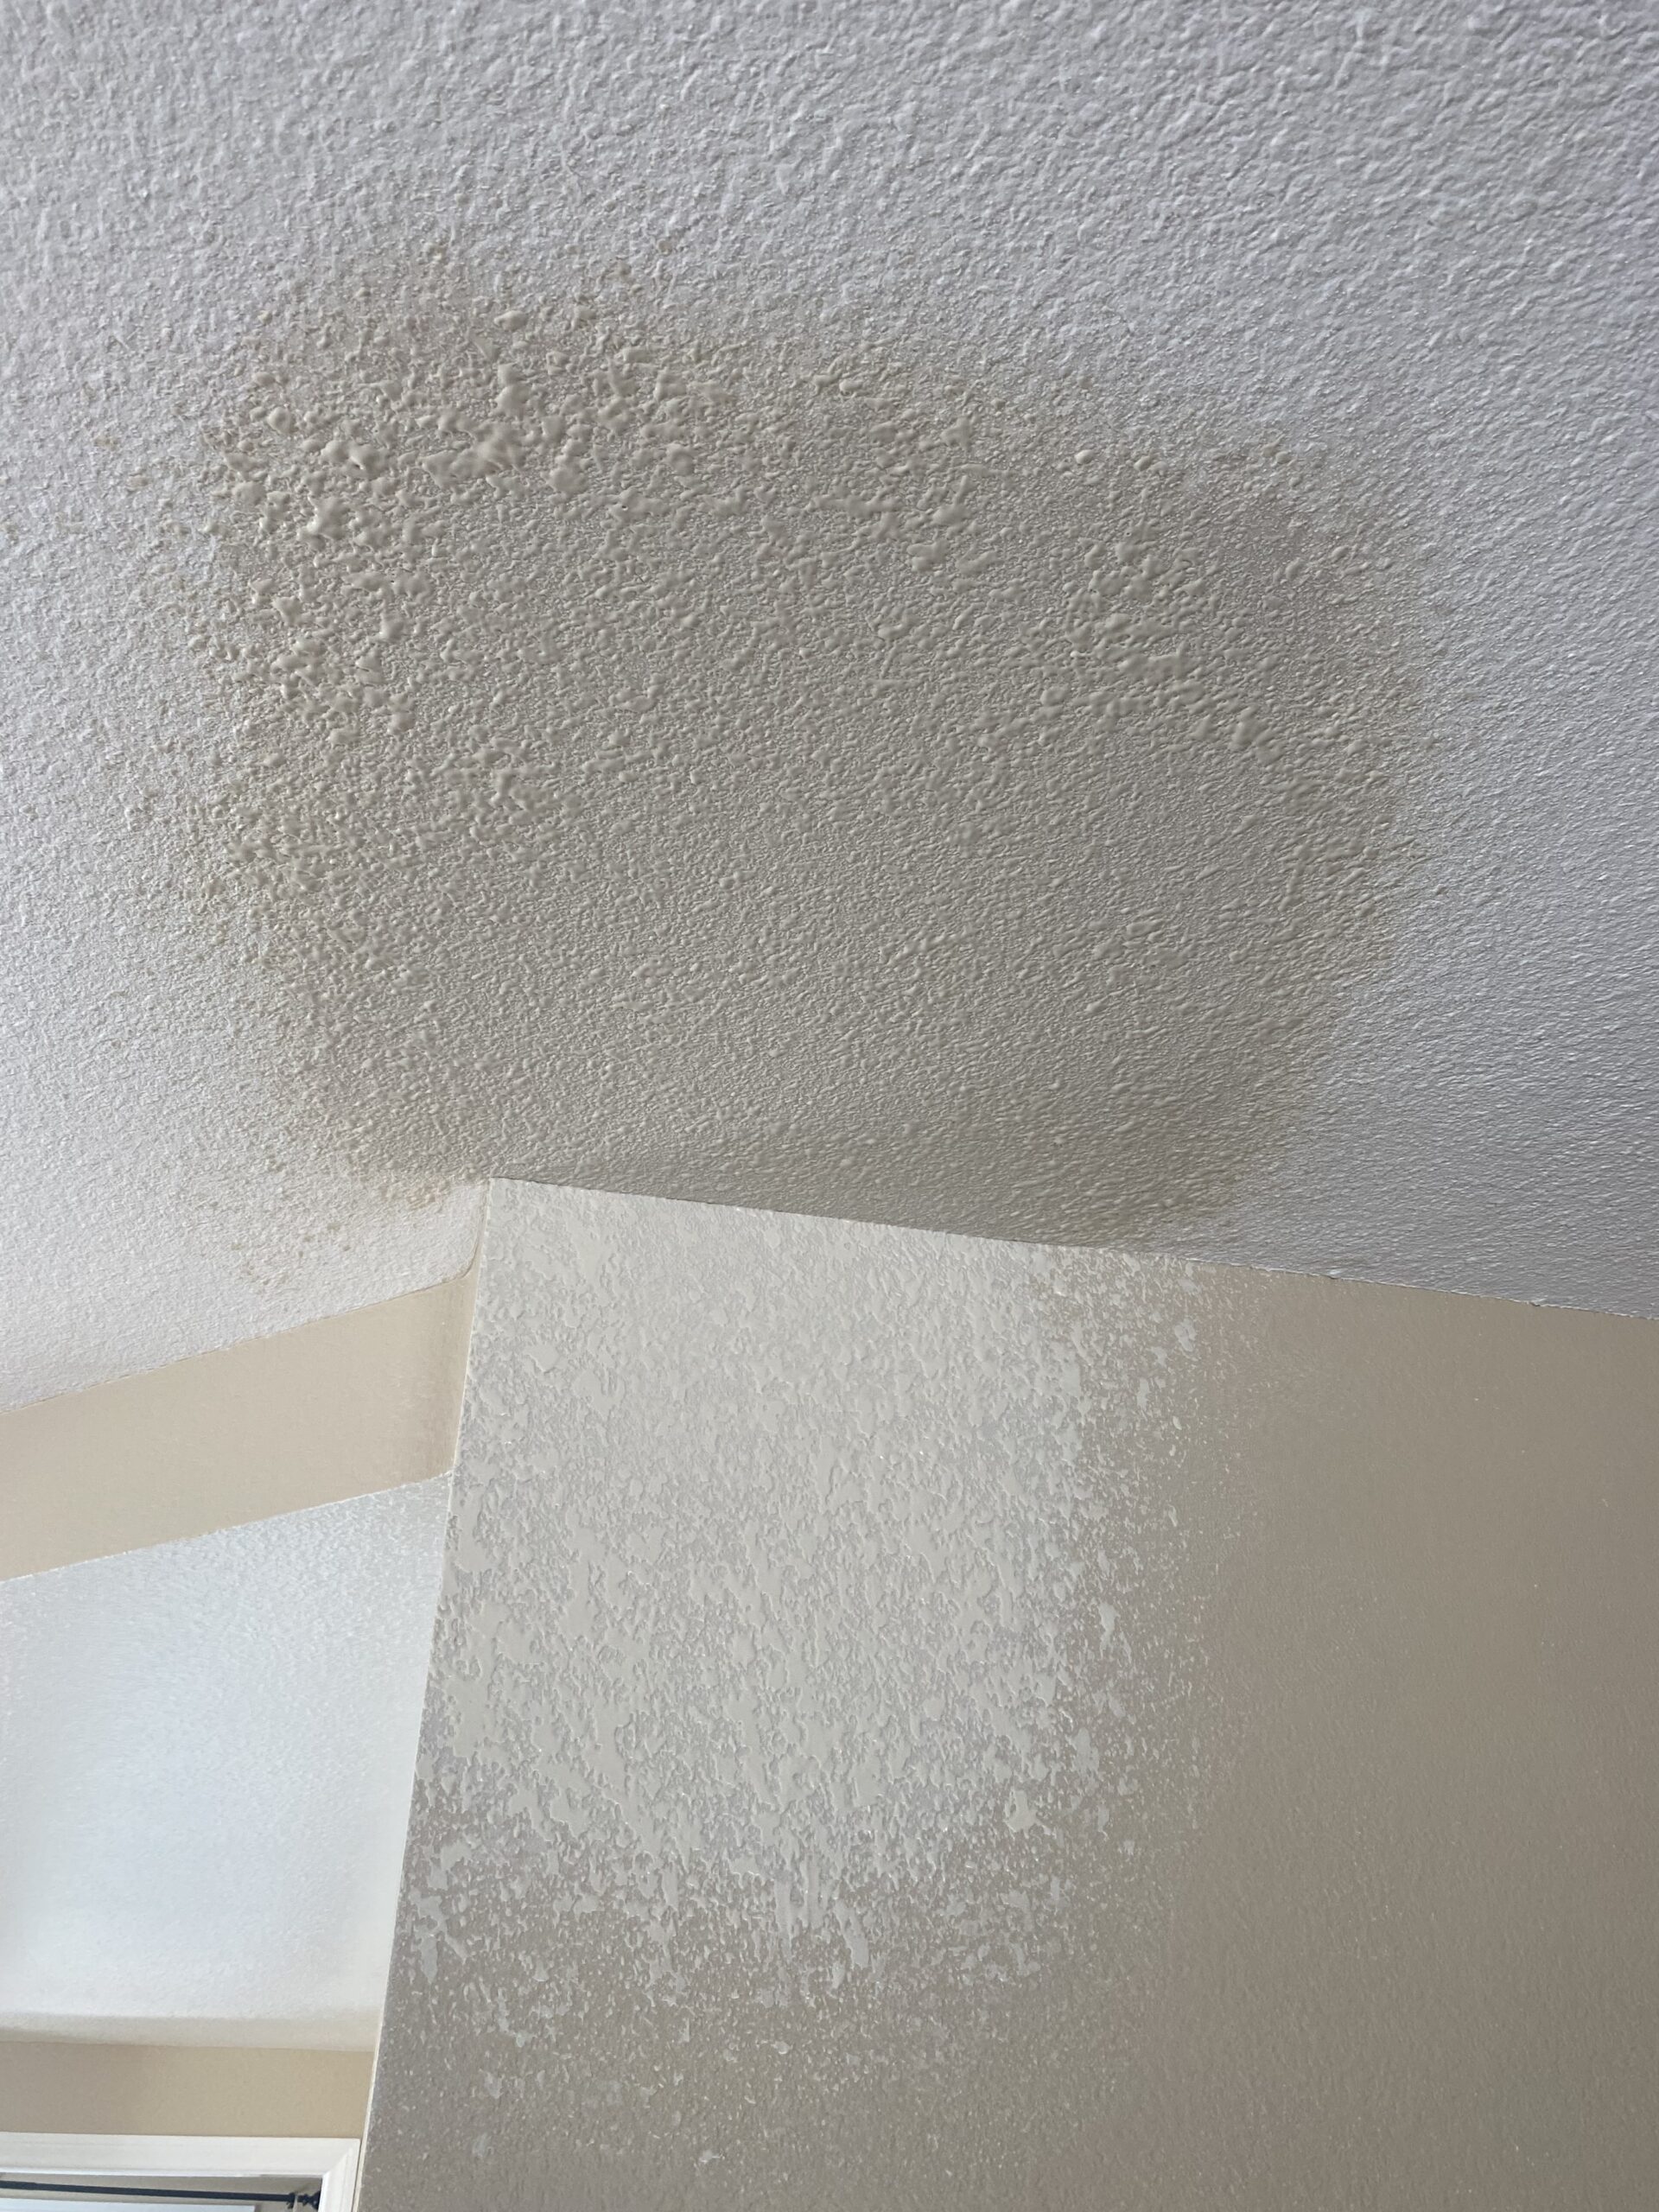 Ceiling drywall repair after